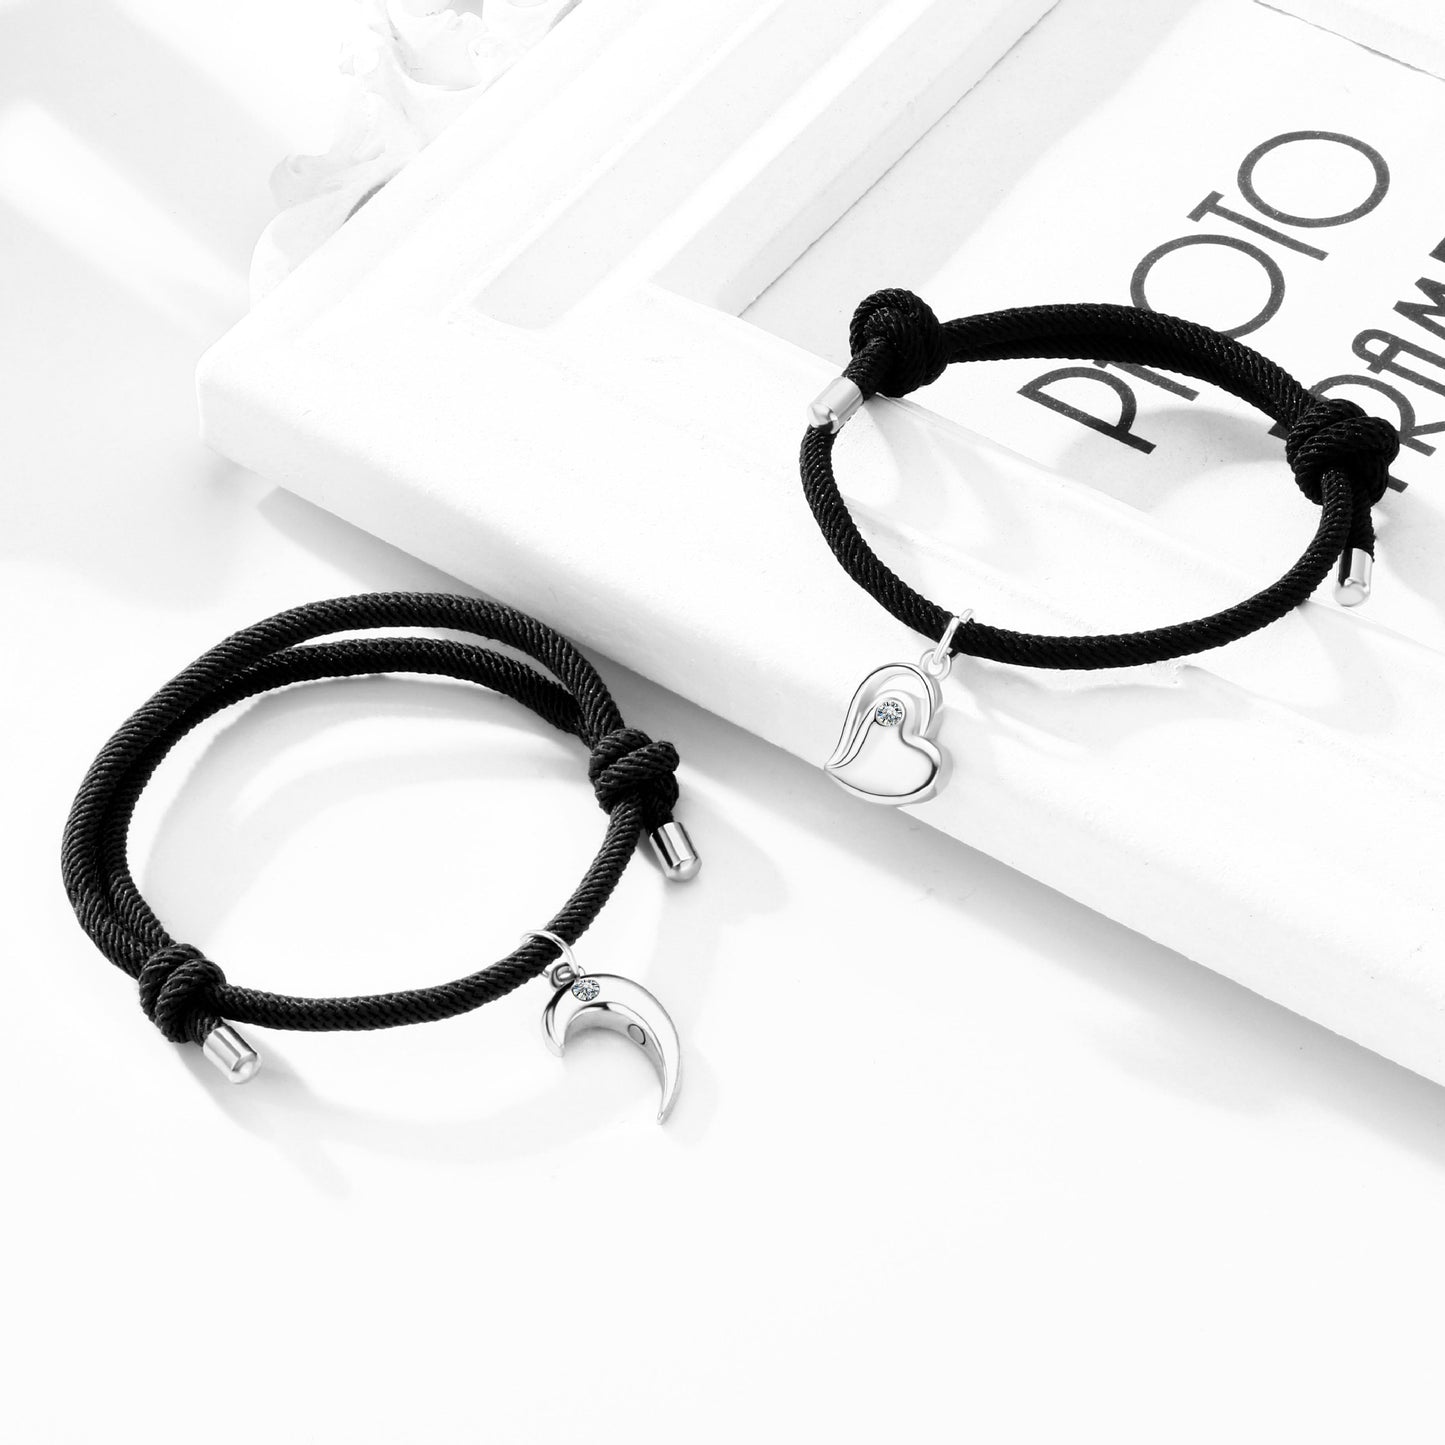 Engravable Magnetic Hearts Bracelets for Couples